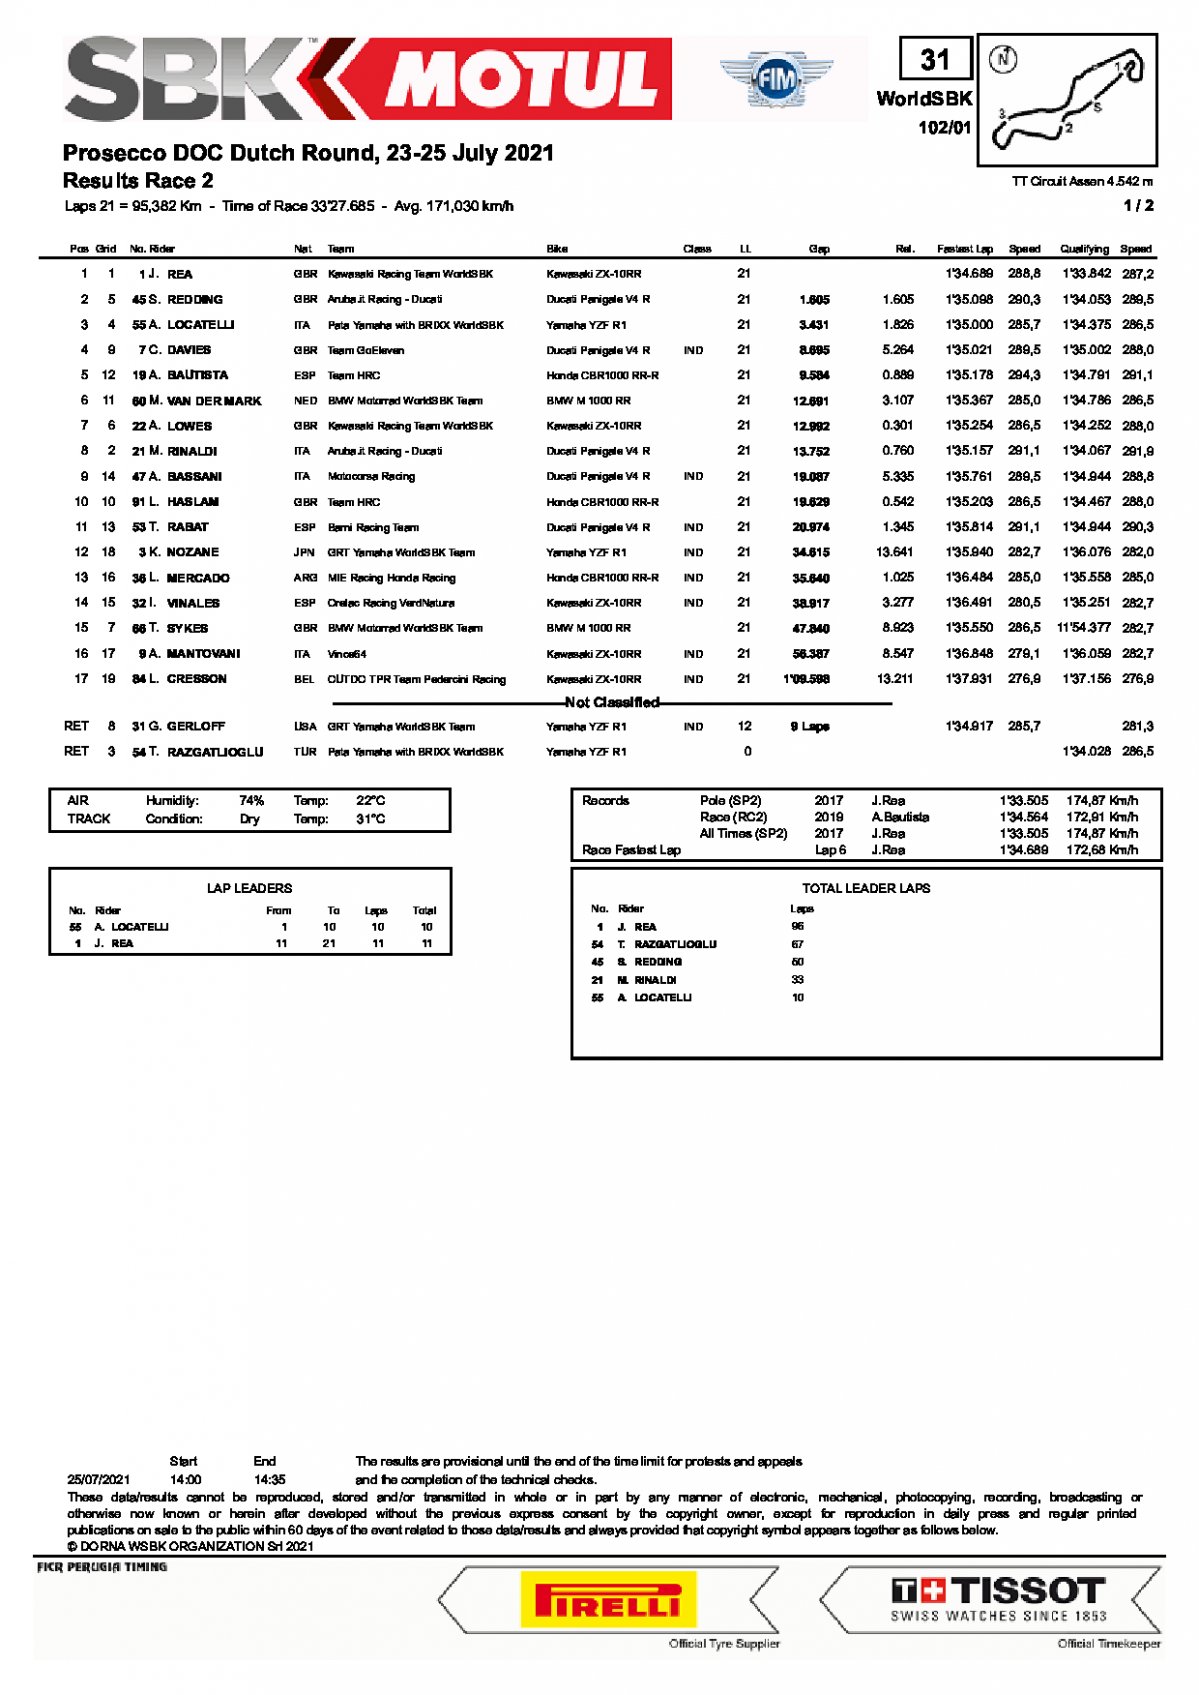 Результаты 2-й гонки WorldSBK, TT Circuit Assen (25/07/2021)